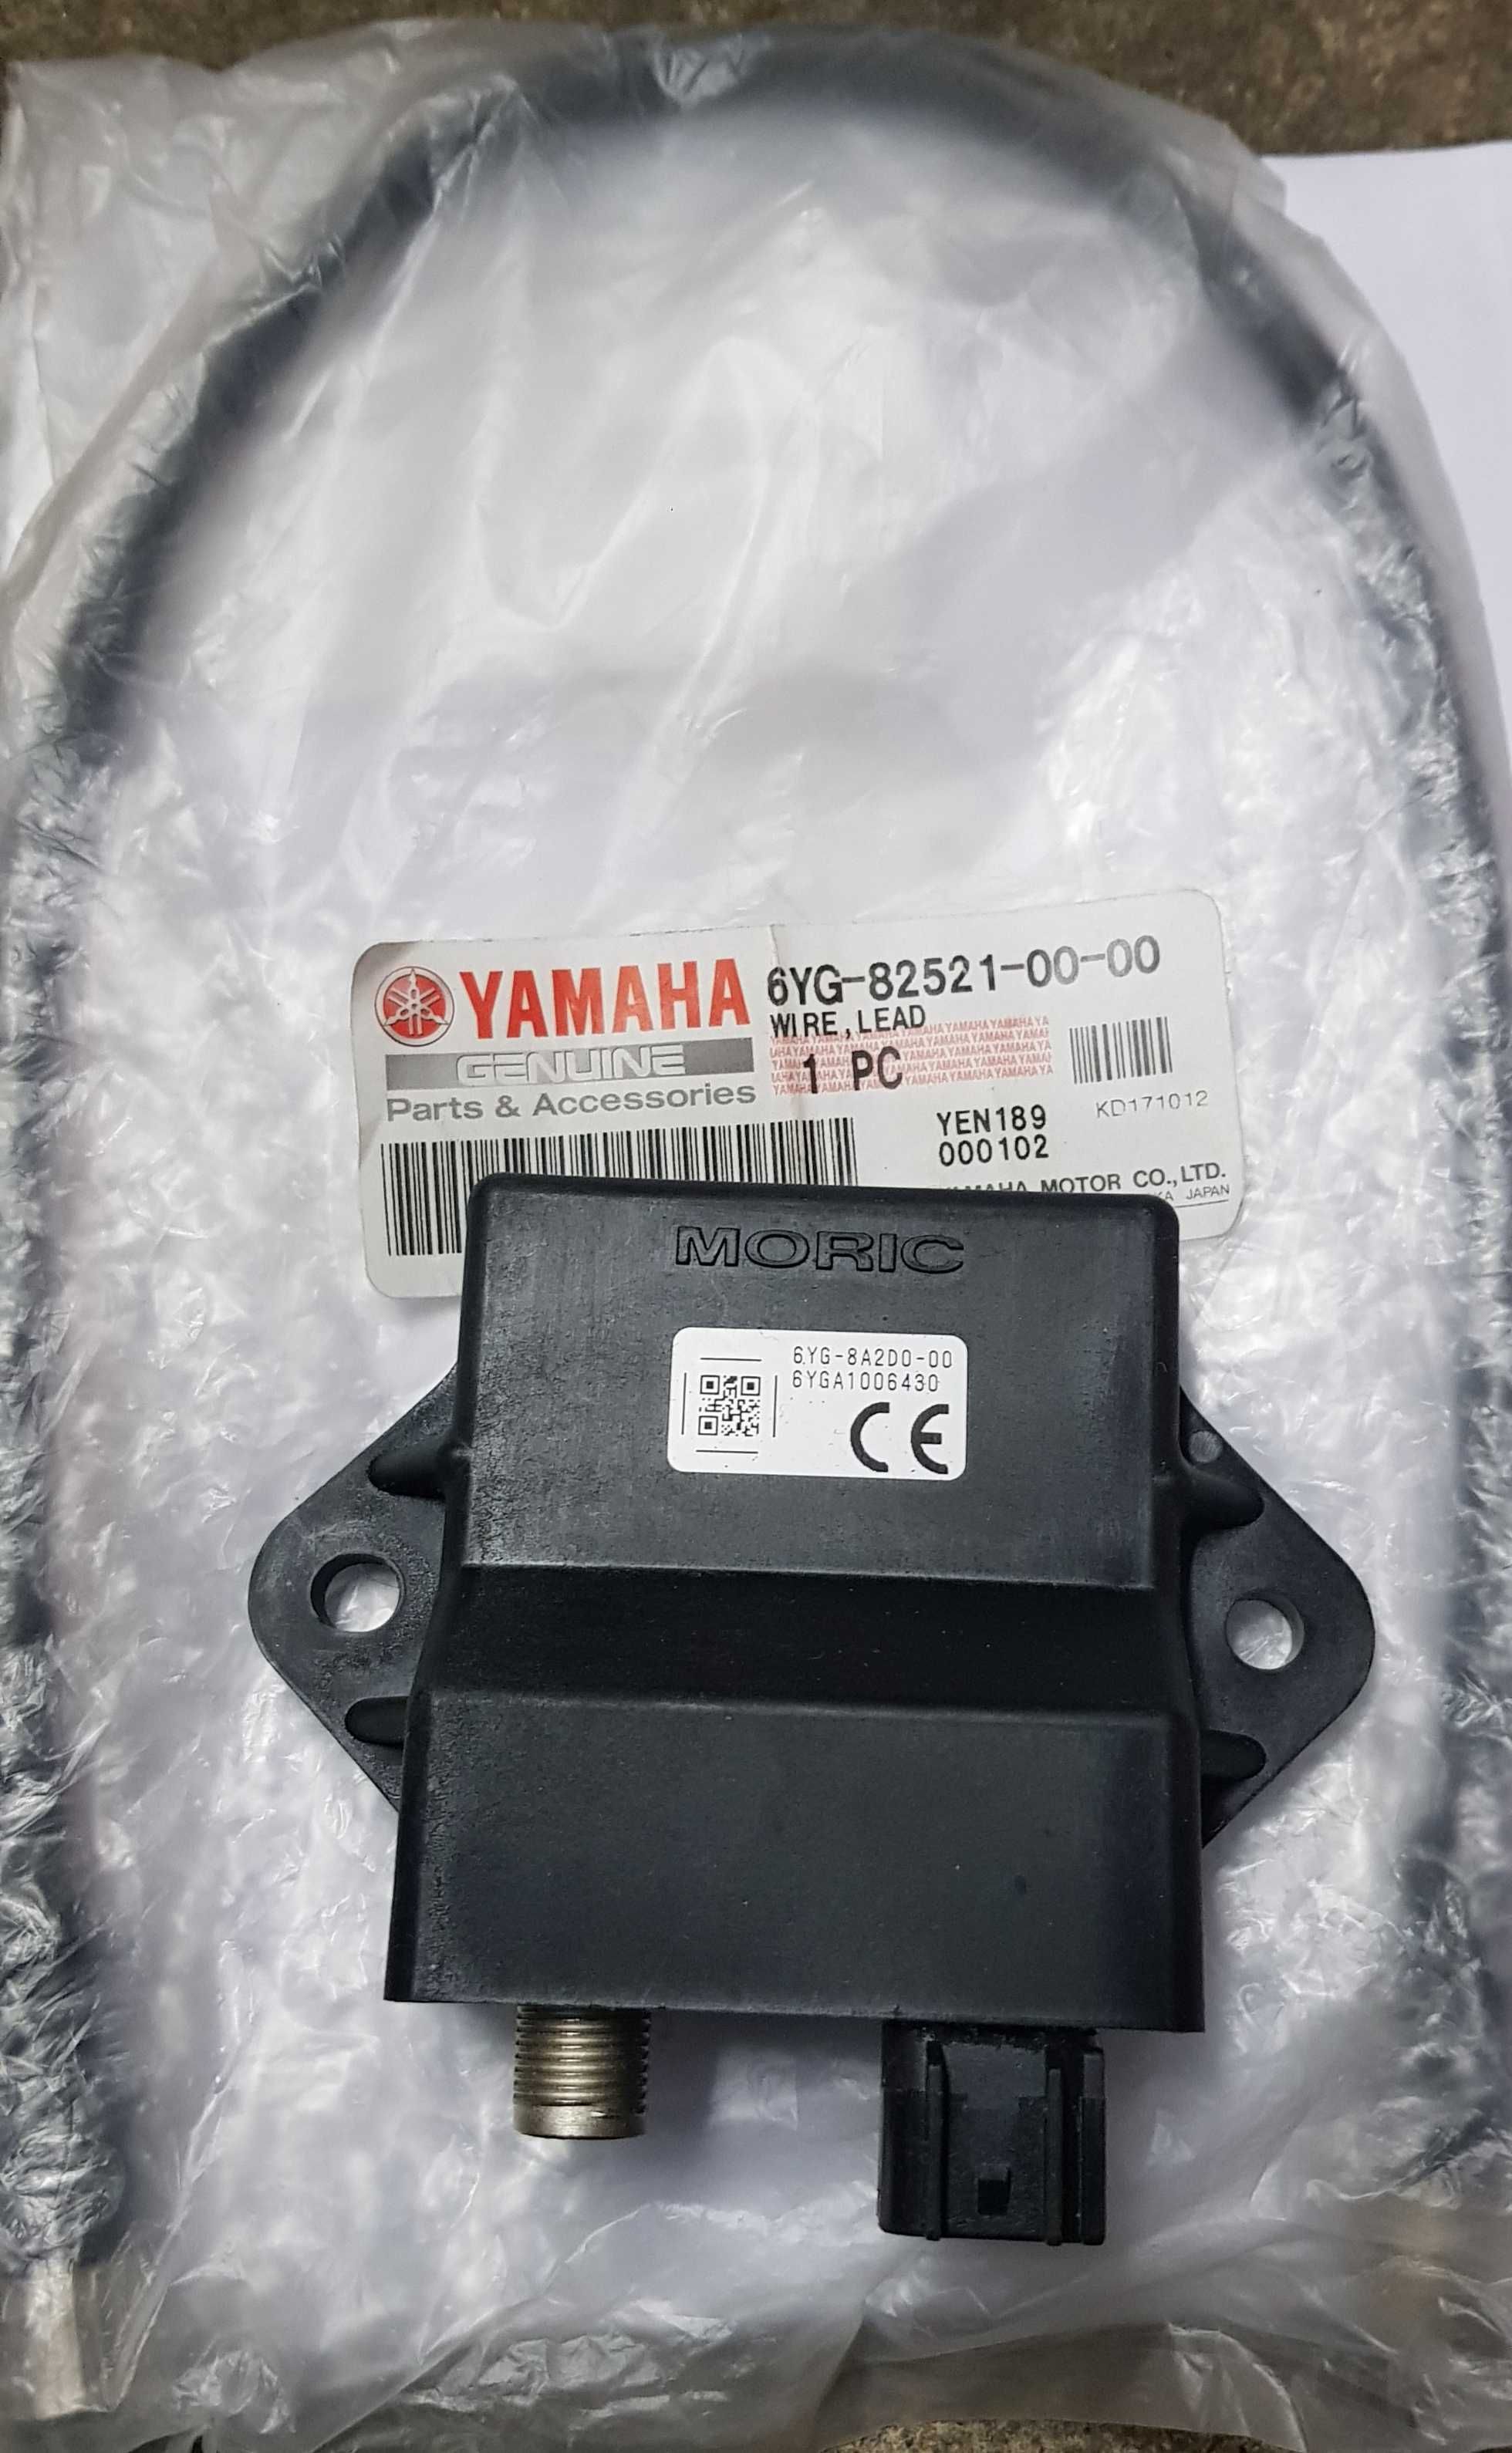 Yamaha przetwornik do NMEA 25-425km interface